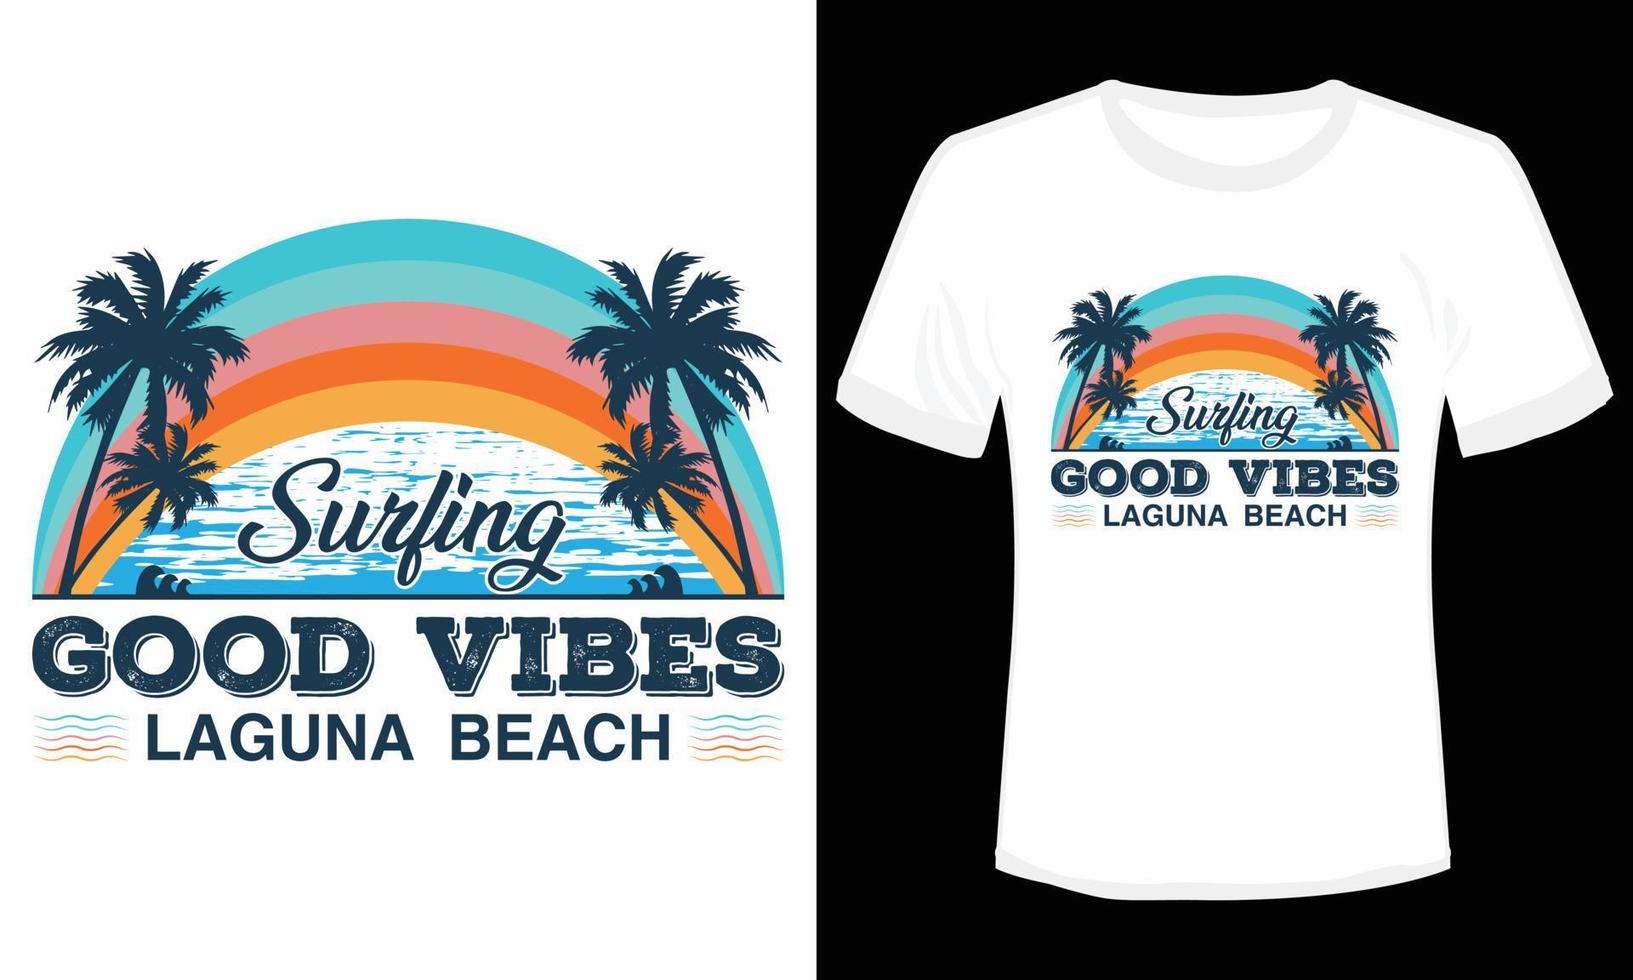 Good Vibes Surfing T-shirt Desing Vector Illustration